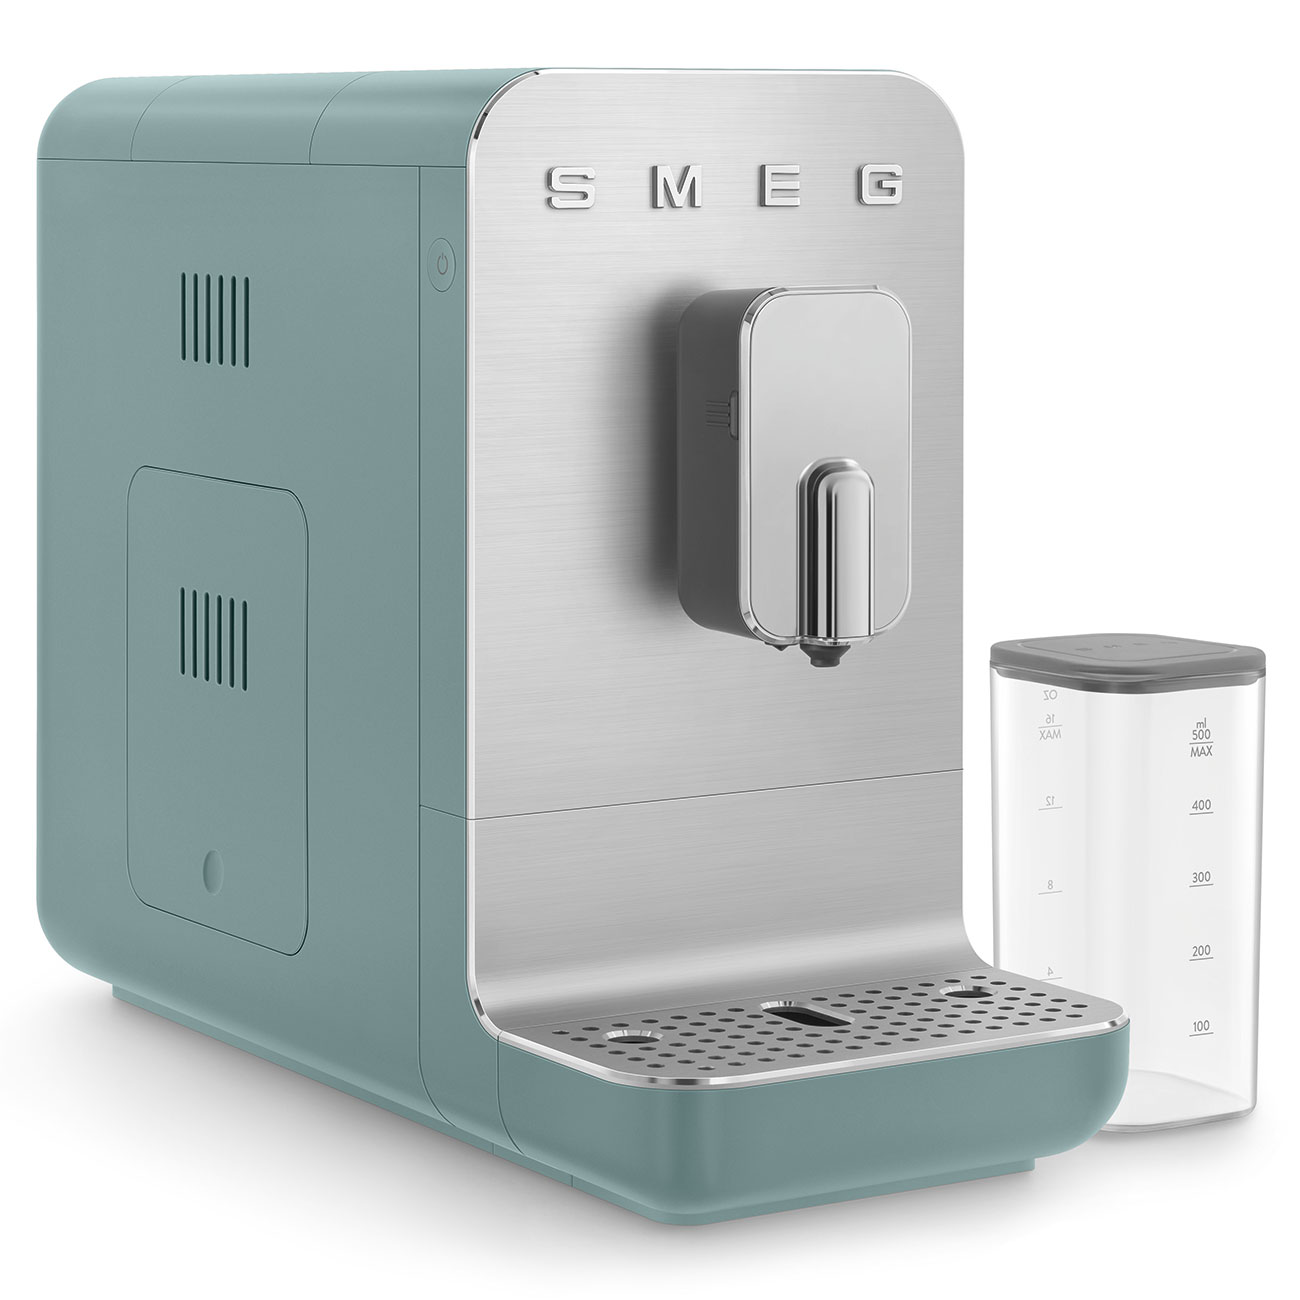 Smeg Emerald green volautomatisch koffiemachine Bean to Cup geïntegreerd melksysteem_3